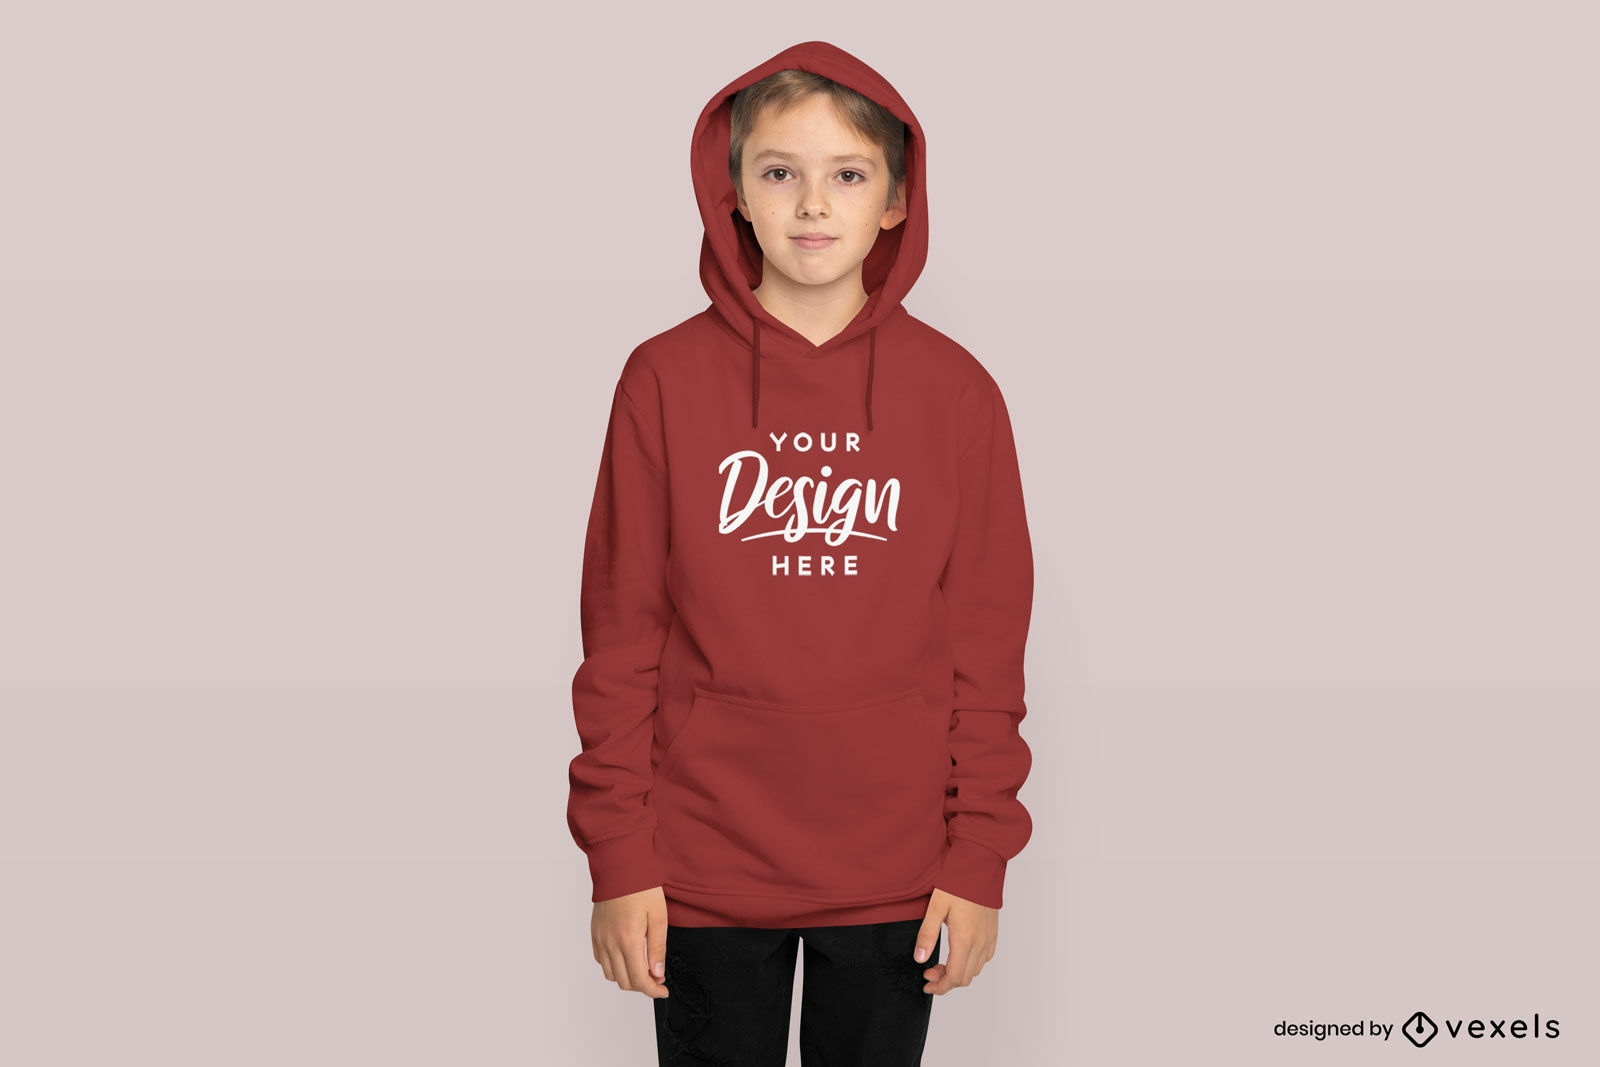 Kid with hood on hoodie mockup design